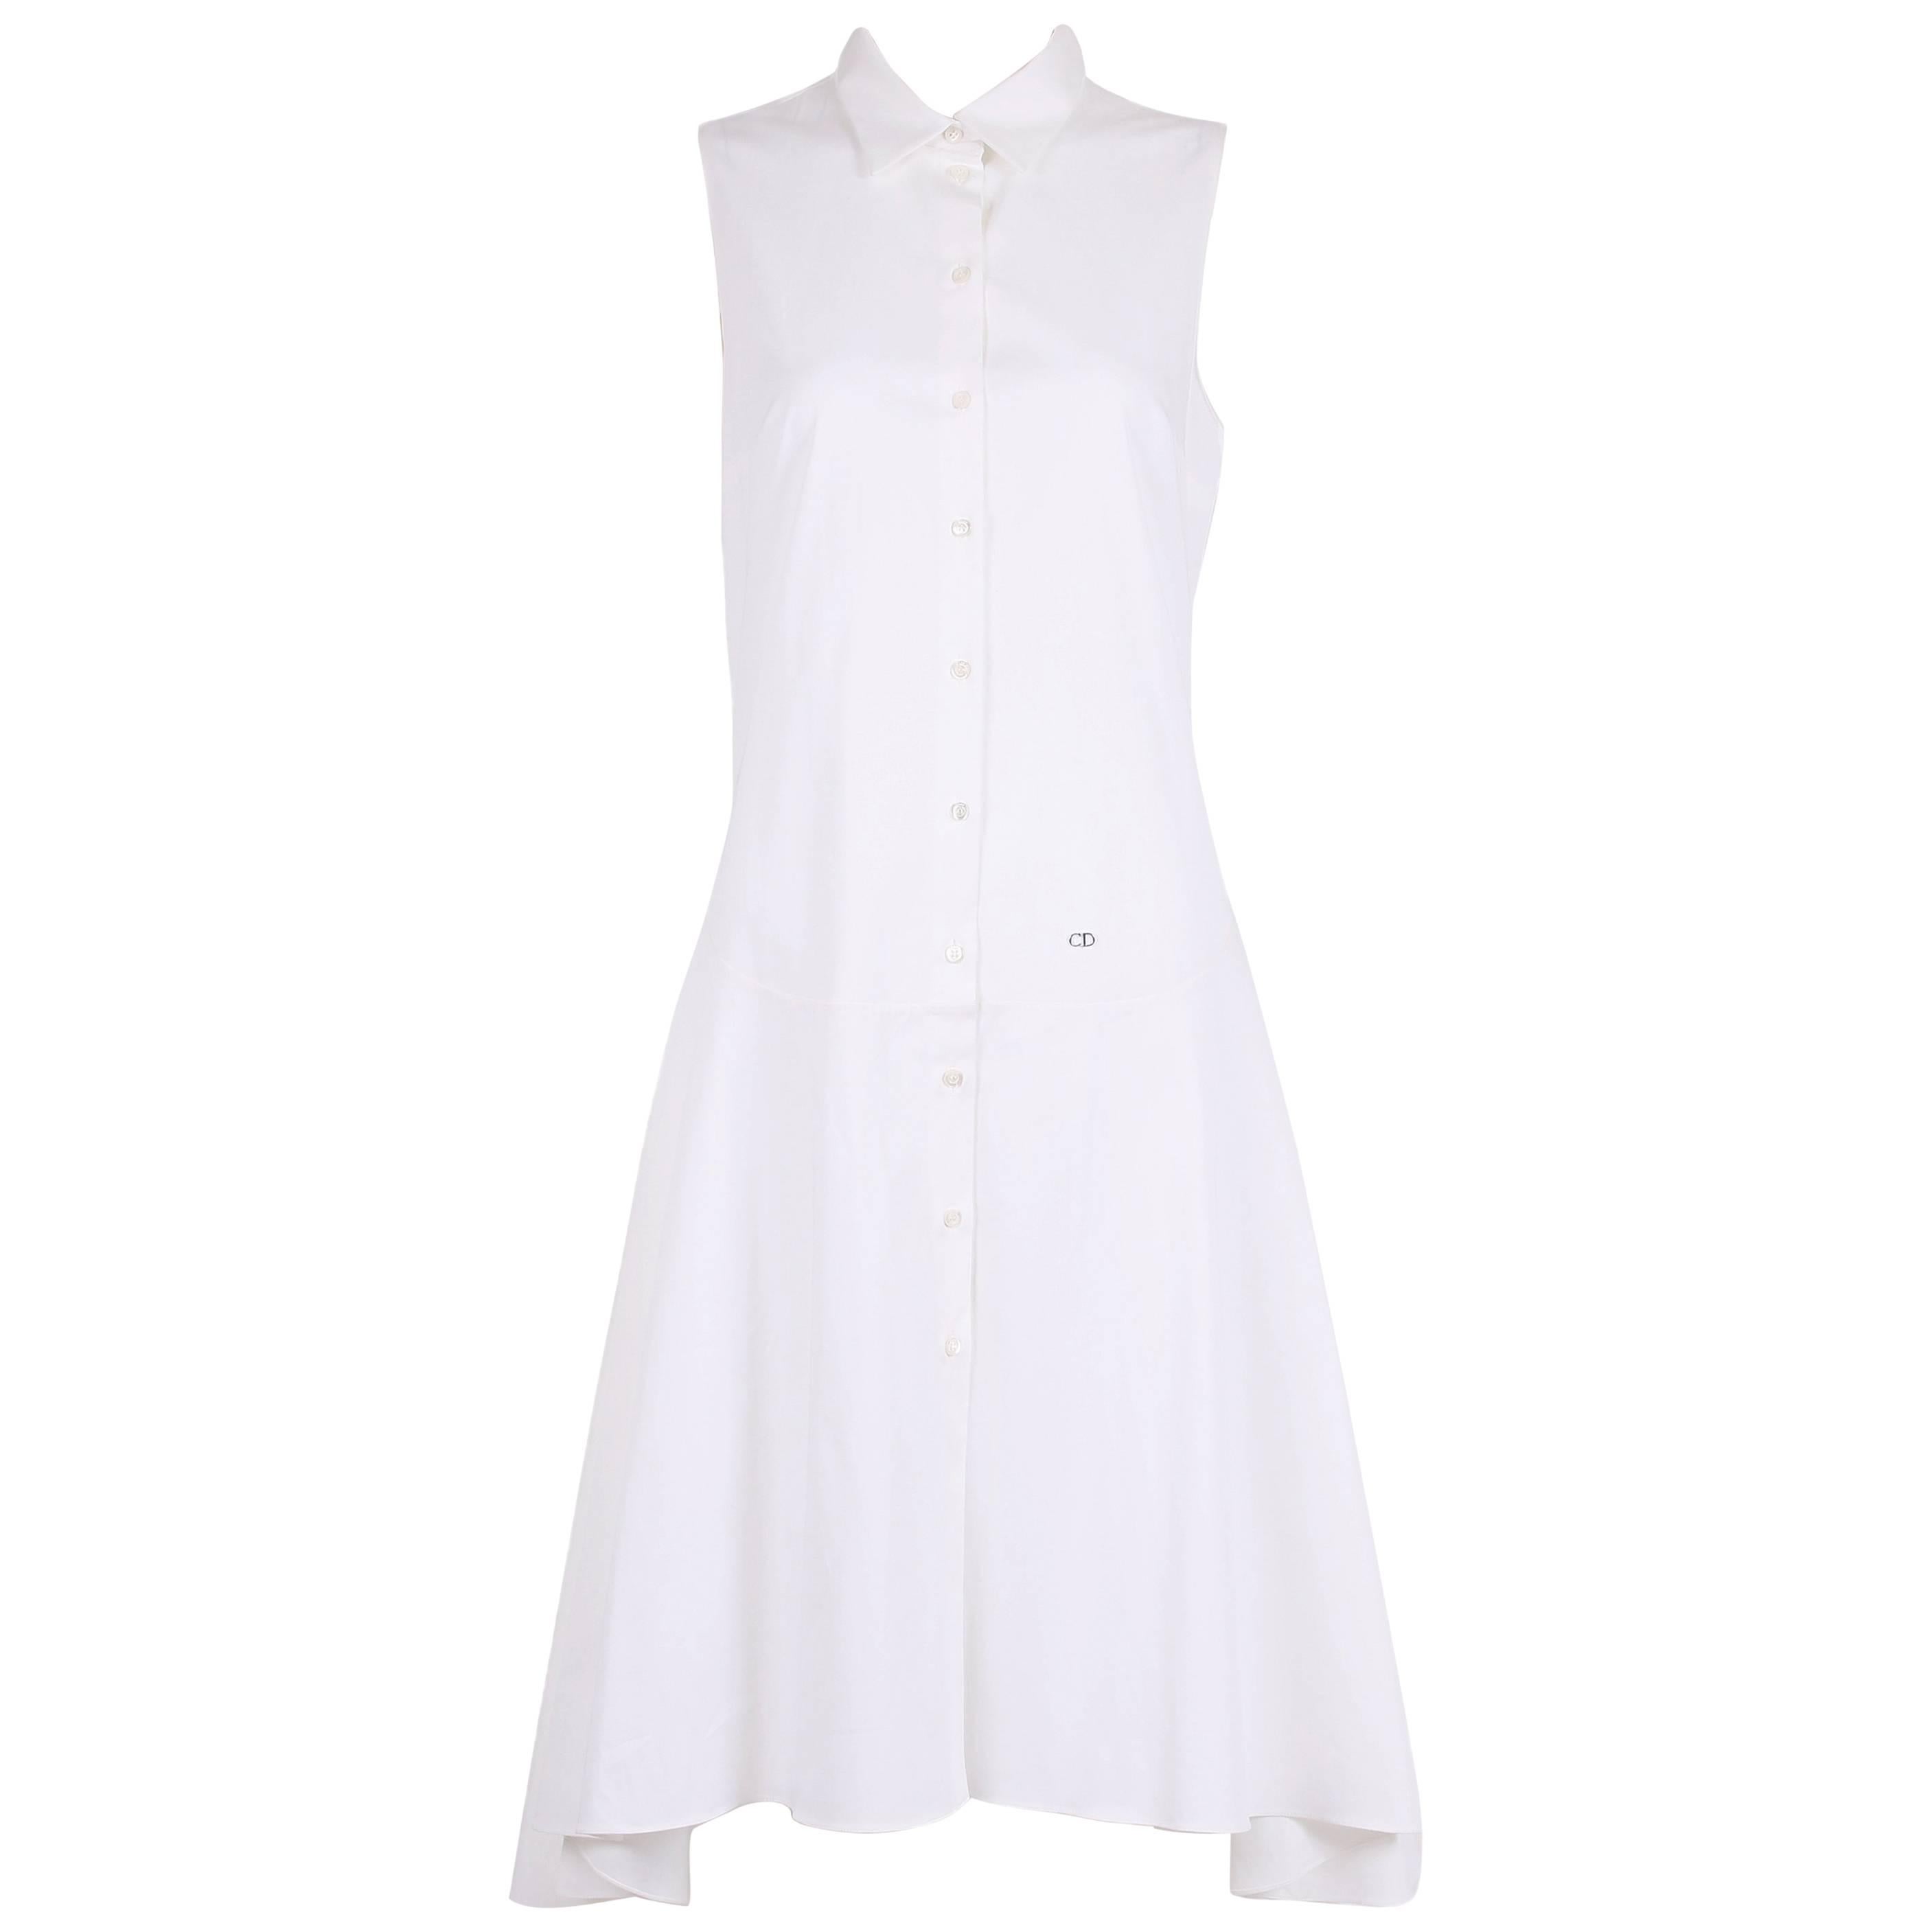 2013 Christian Dior by Raf Simons White Sleeveless Day Dress w/High-Low Hem